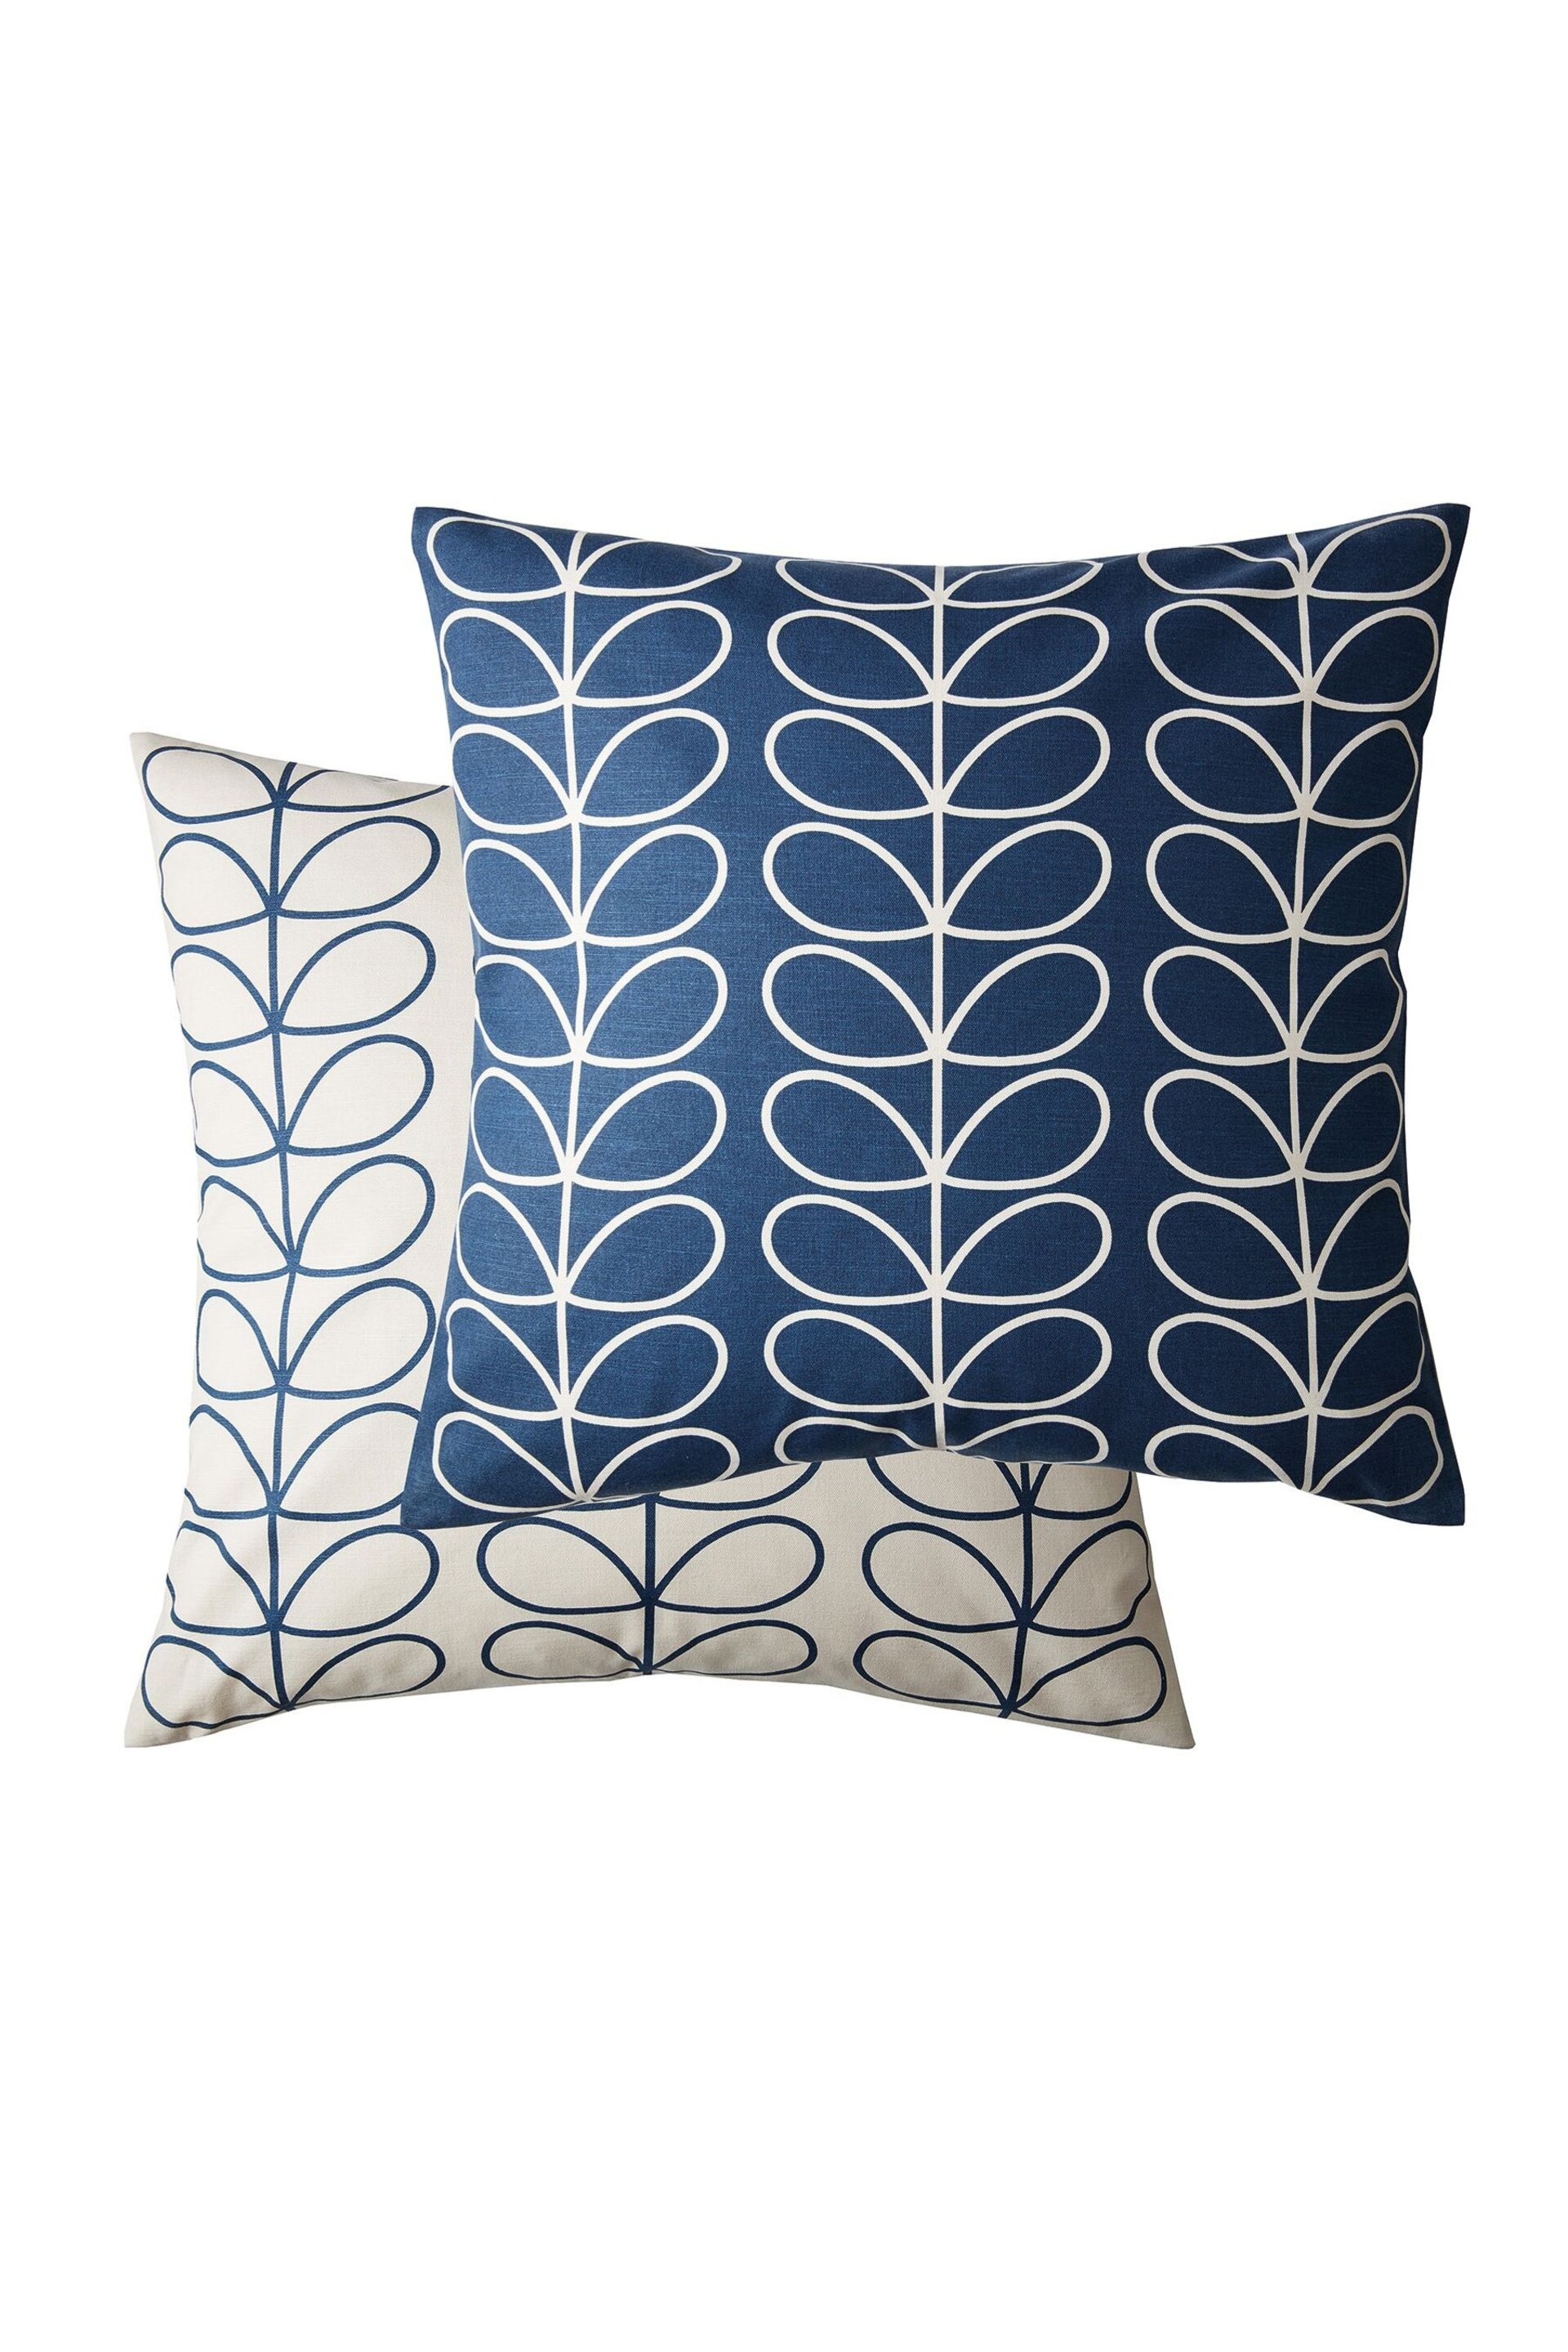 Orla Kiely Blue Small Linear Cushion - Image 1 of 1